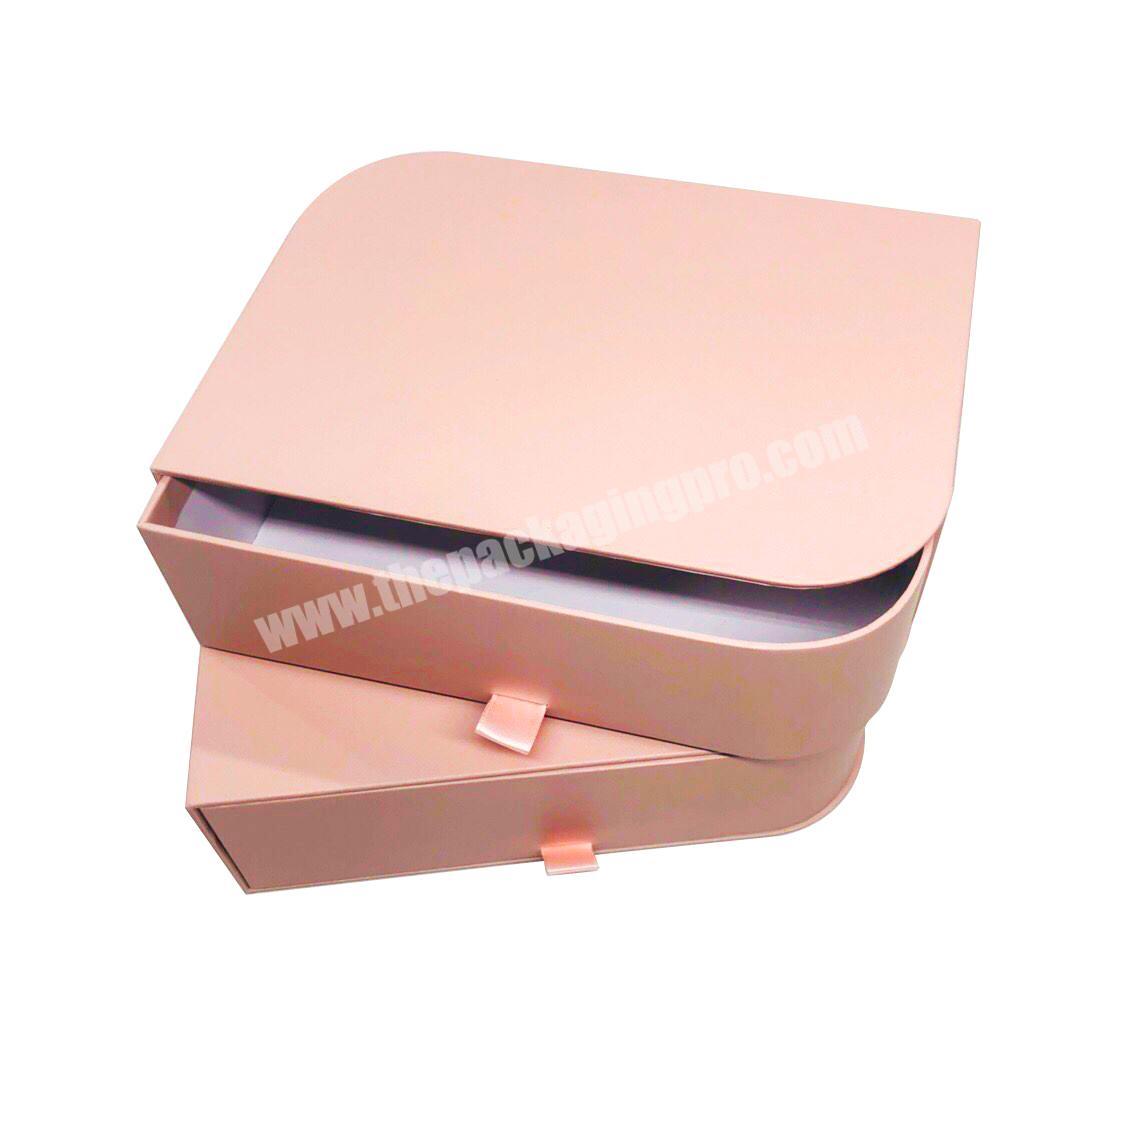 OEM luxury Perfect pink Makeup cosmetic skincare jewery Packaging Box gift box kit set drawer boxwith Foam Insert